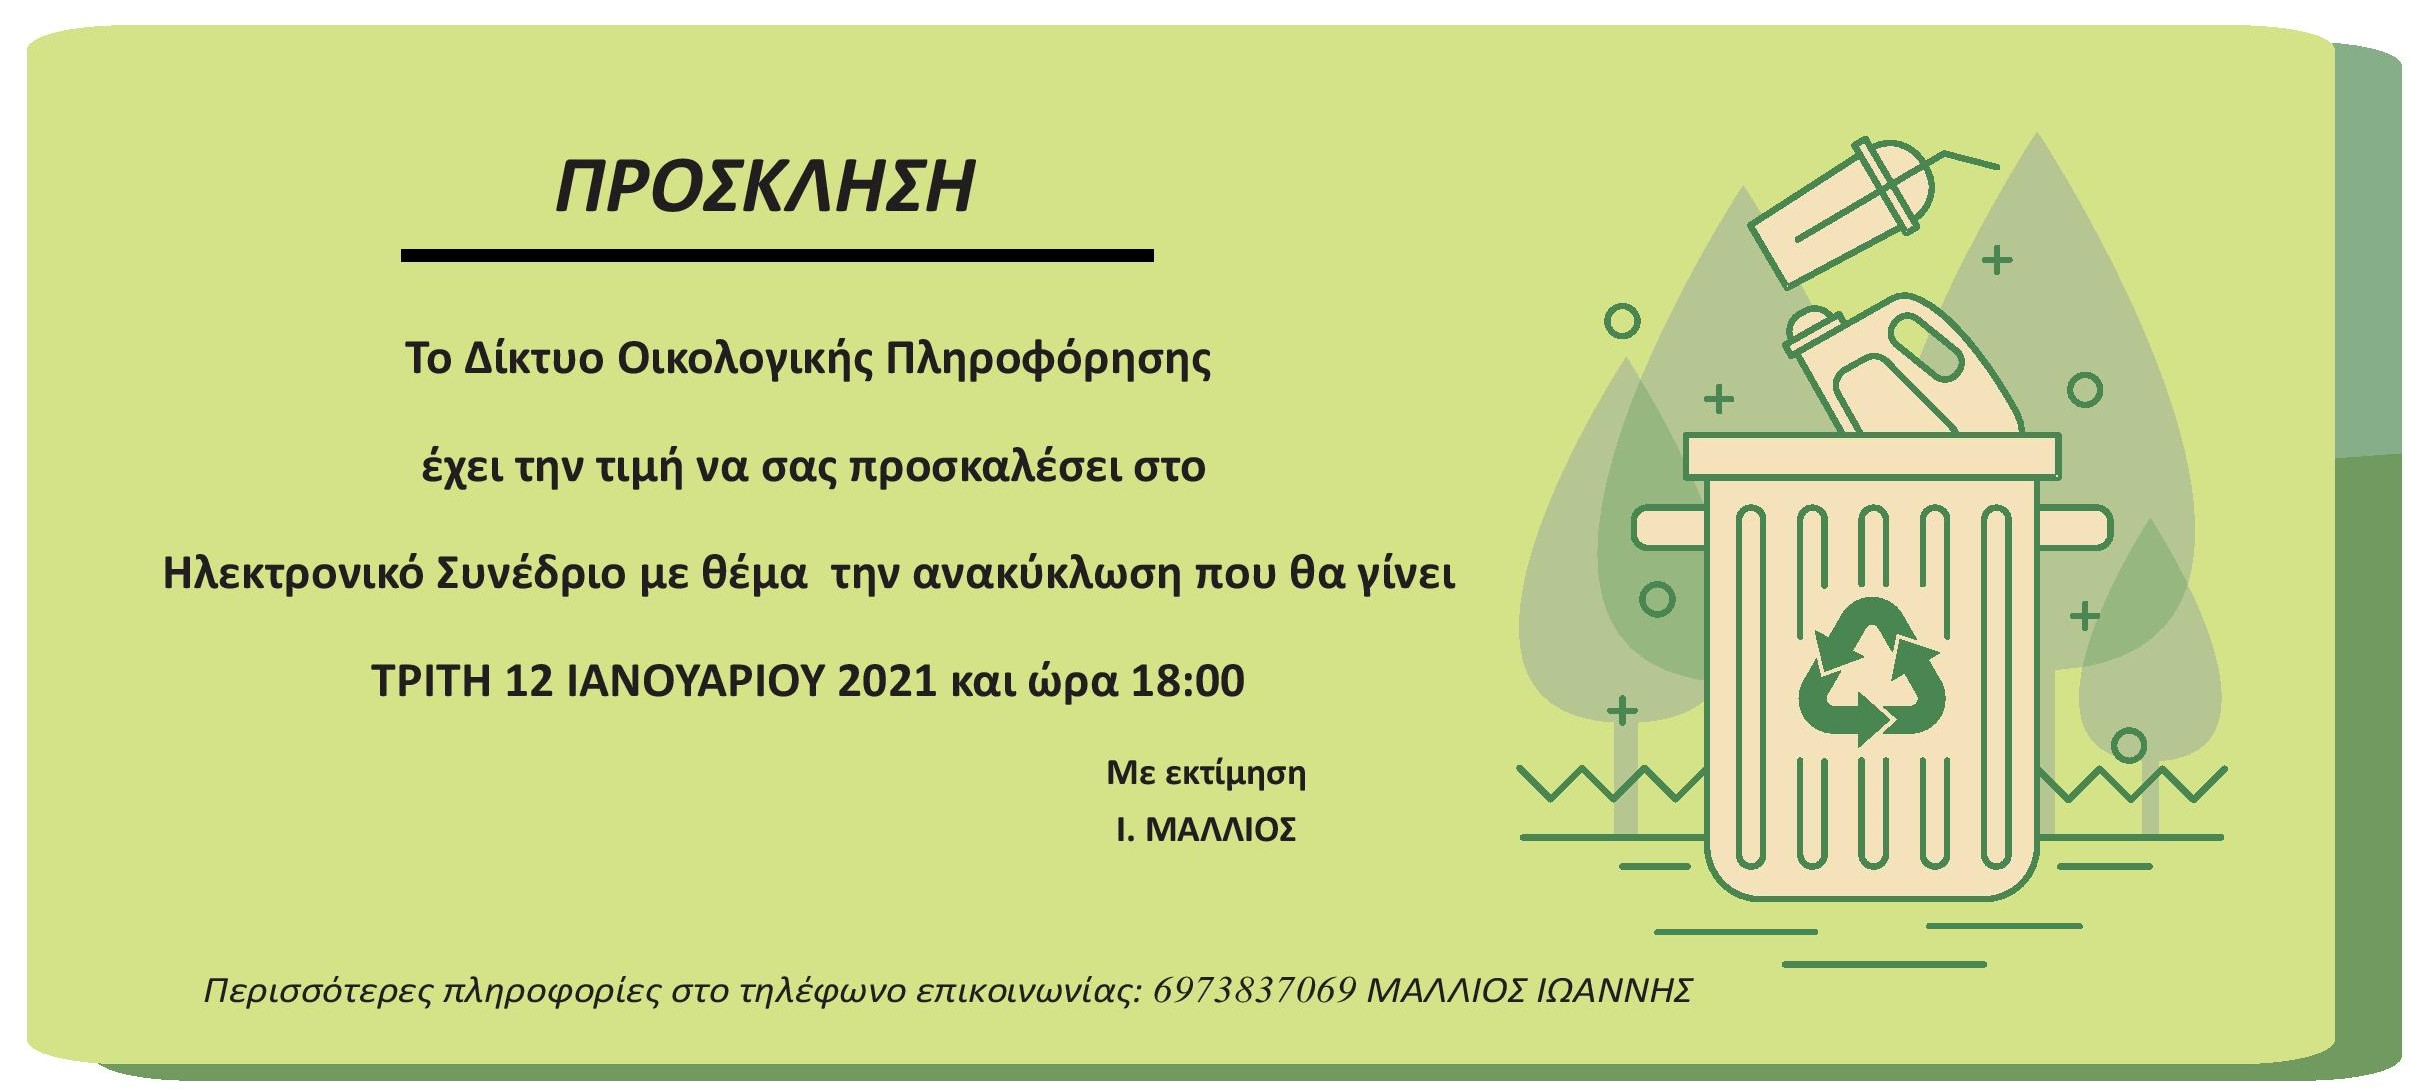 1o Συνέδριο Ανακύκλωσης Ανατολικής Μακεδονίας θράκης: Μείωση, Επαναχρησιμοποίηση και Ανακύκλωση Απορριμμάτων